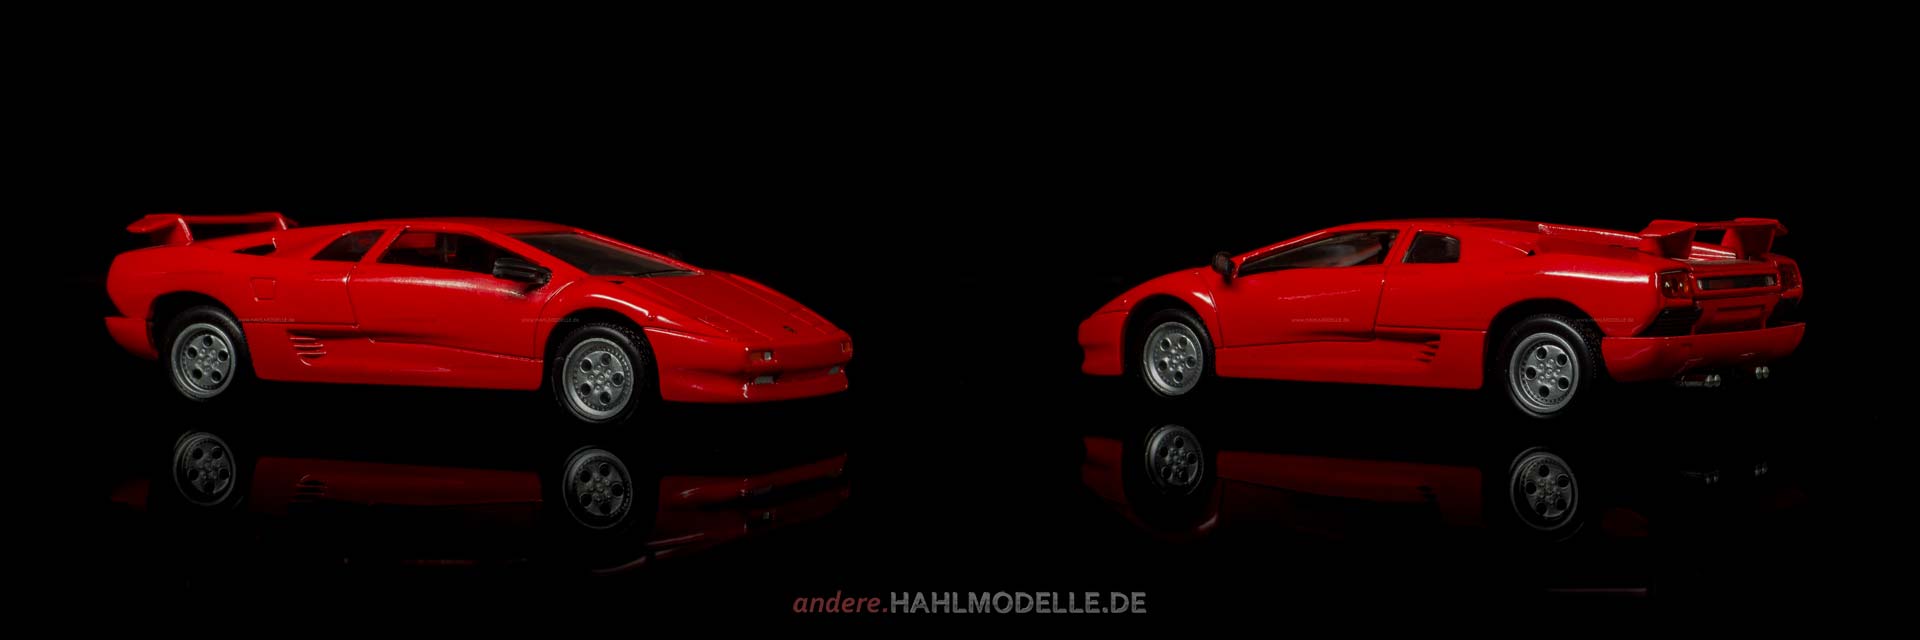 Lamborghini Diablo | Coupé | Ixo (Del Prado Car Collection) | 1:43 | www.andere.hahlmodelle.de